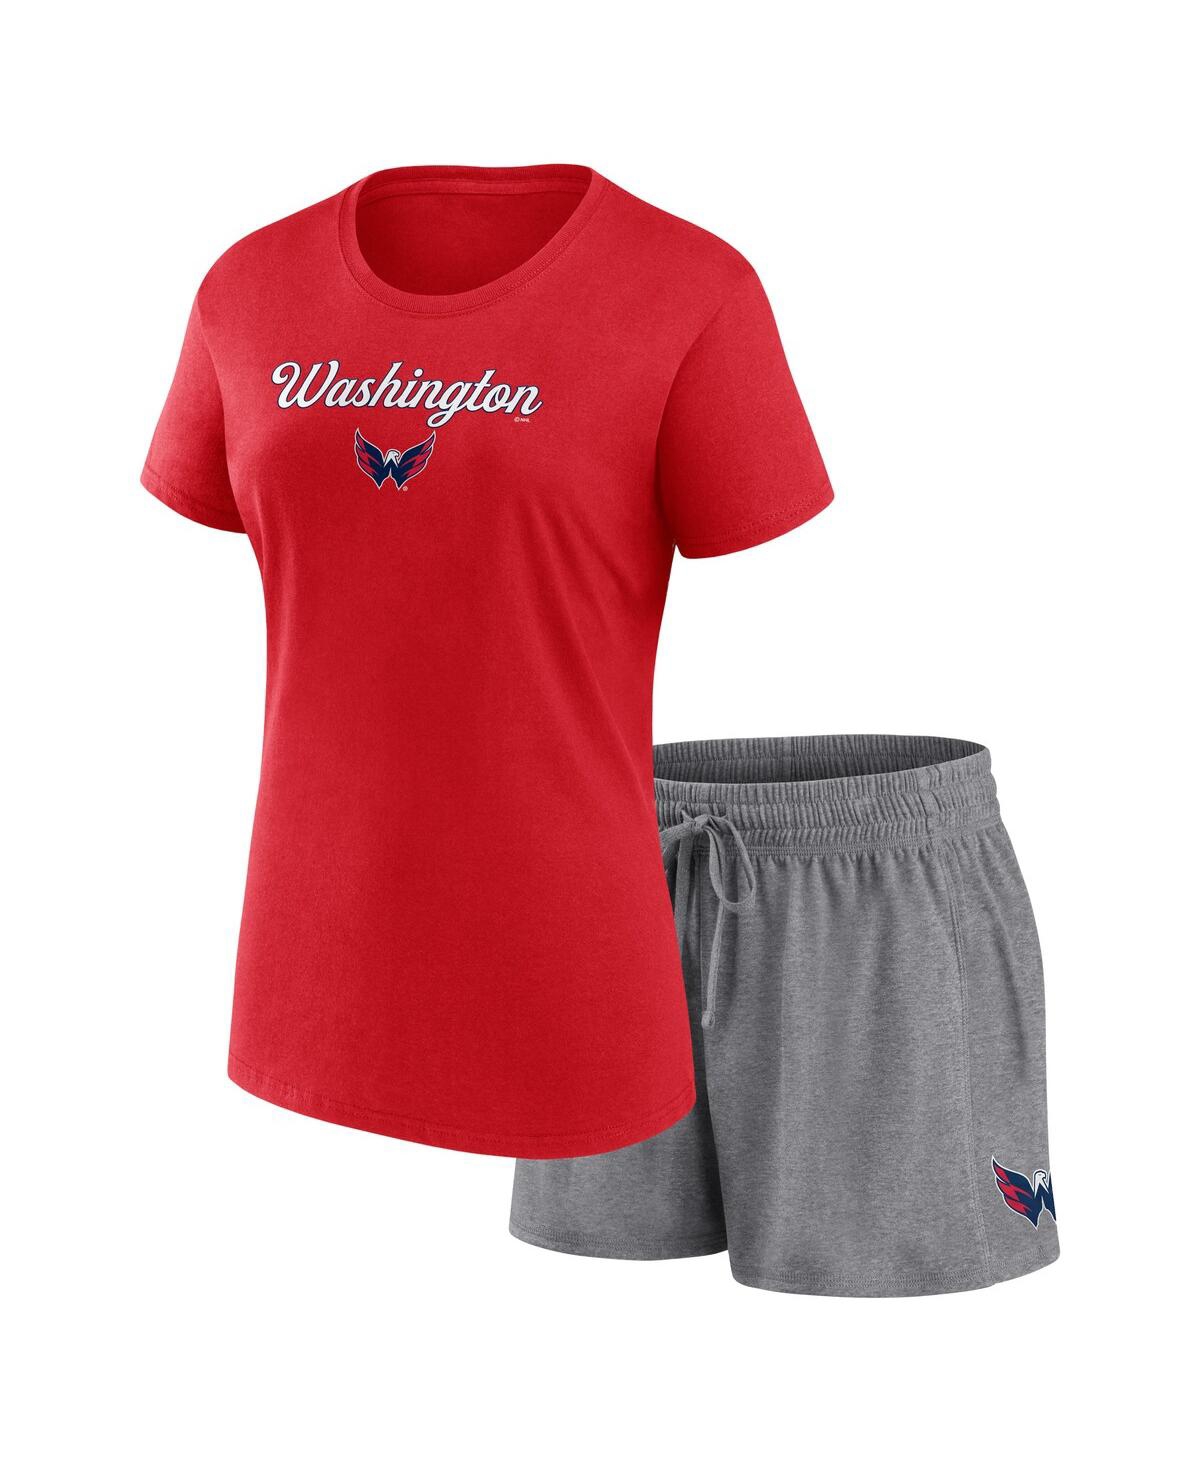 Women's Fanatics Red, Heather Gray Washington Capitals Script T-shirt and Shorts Set - Red, Heather Gray